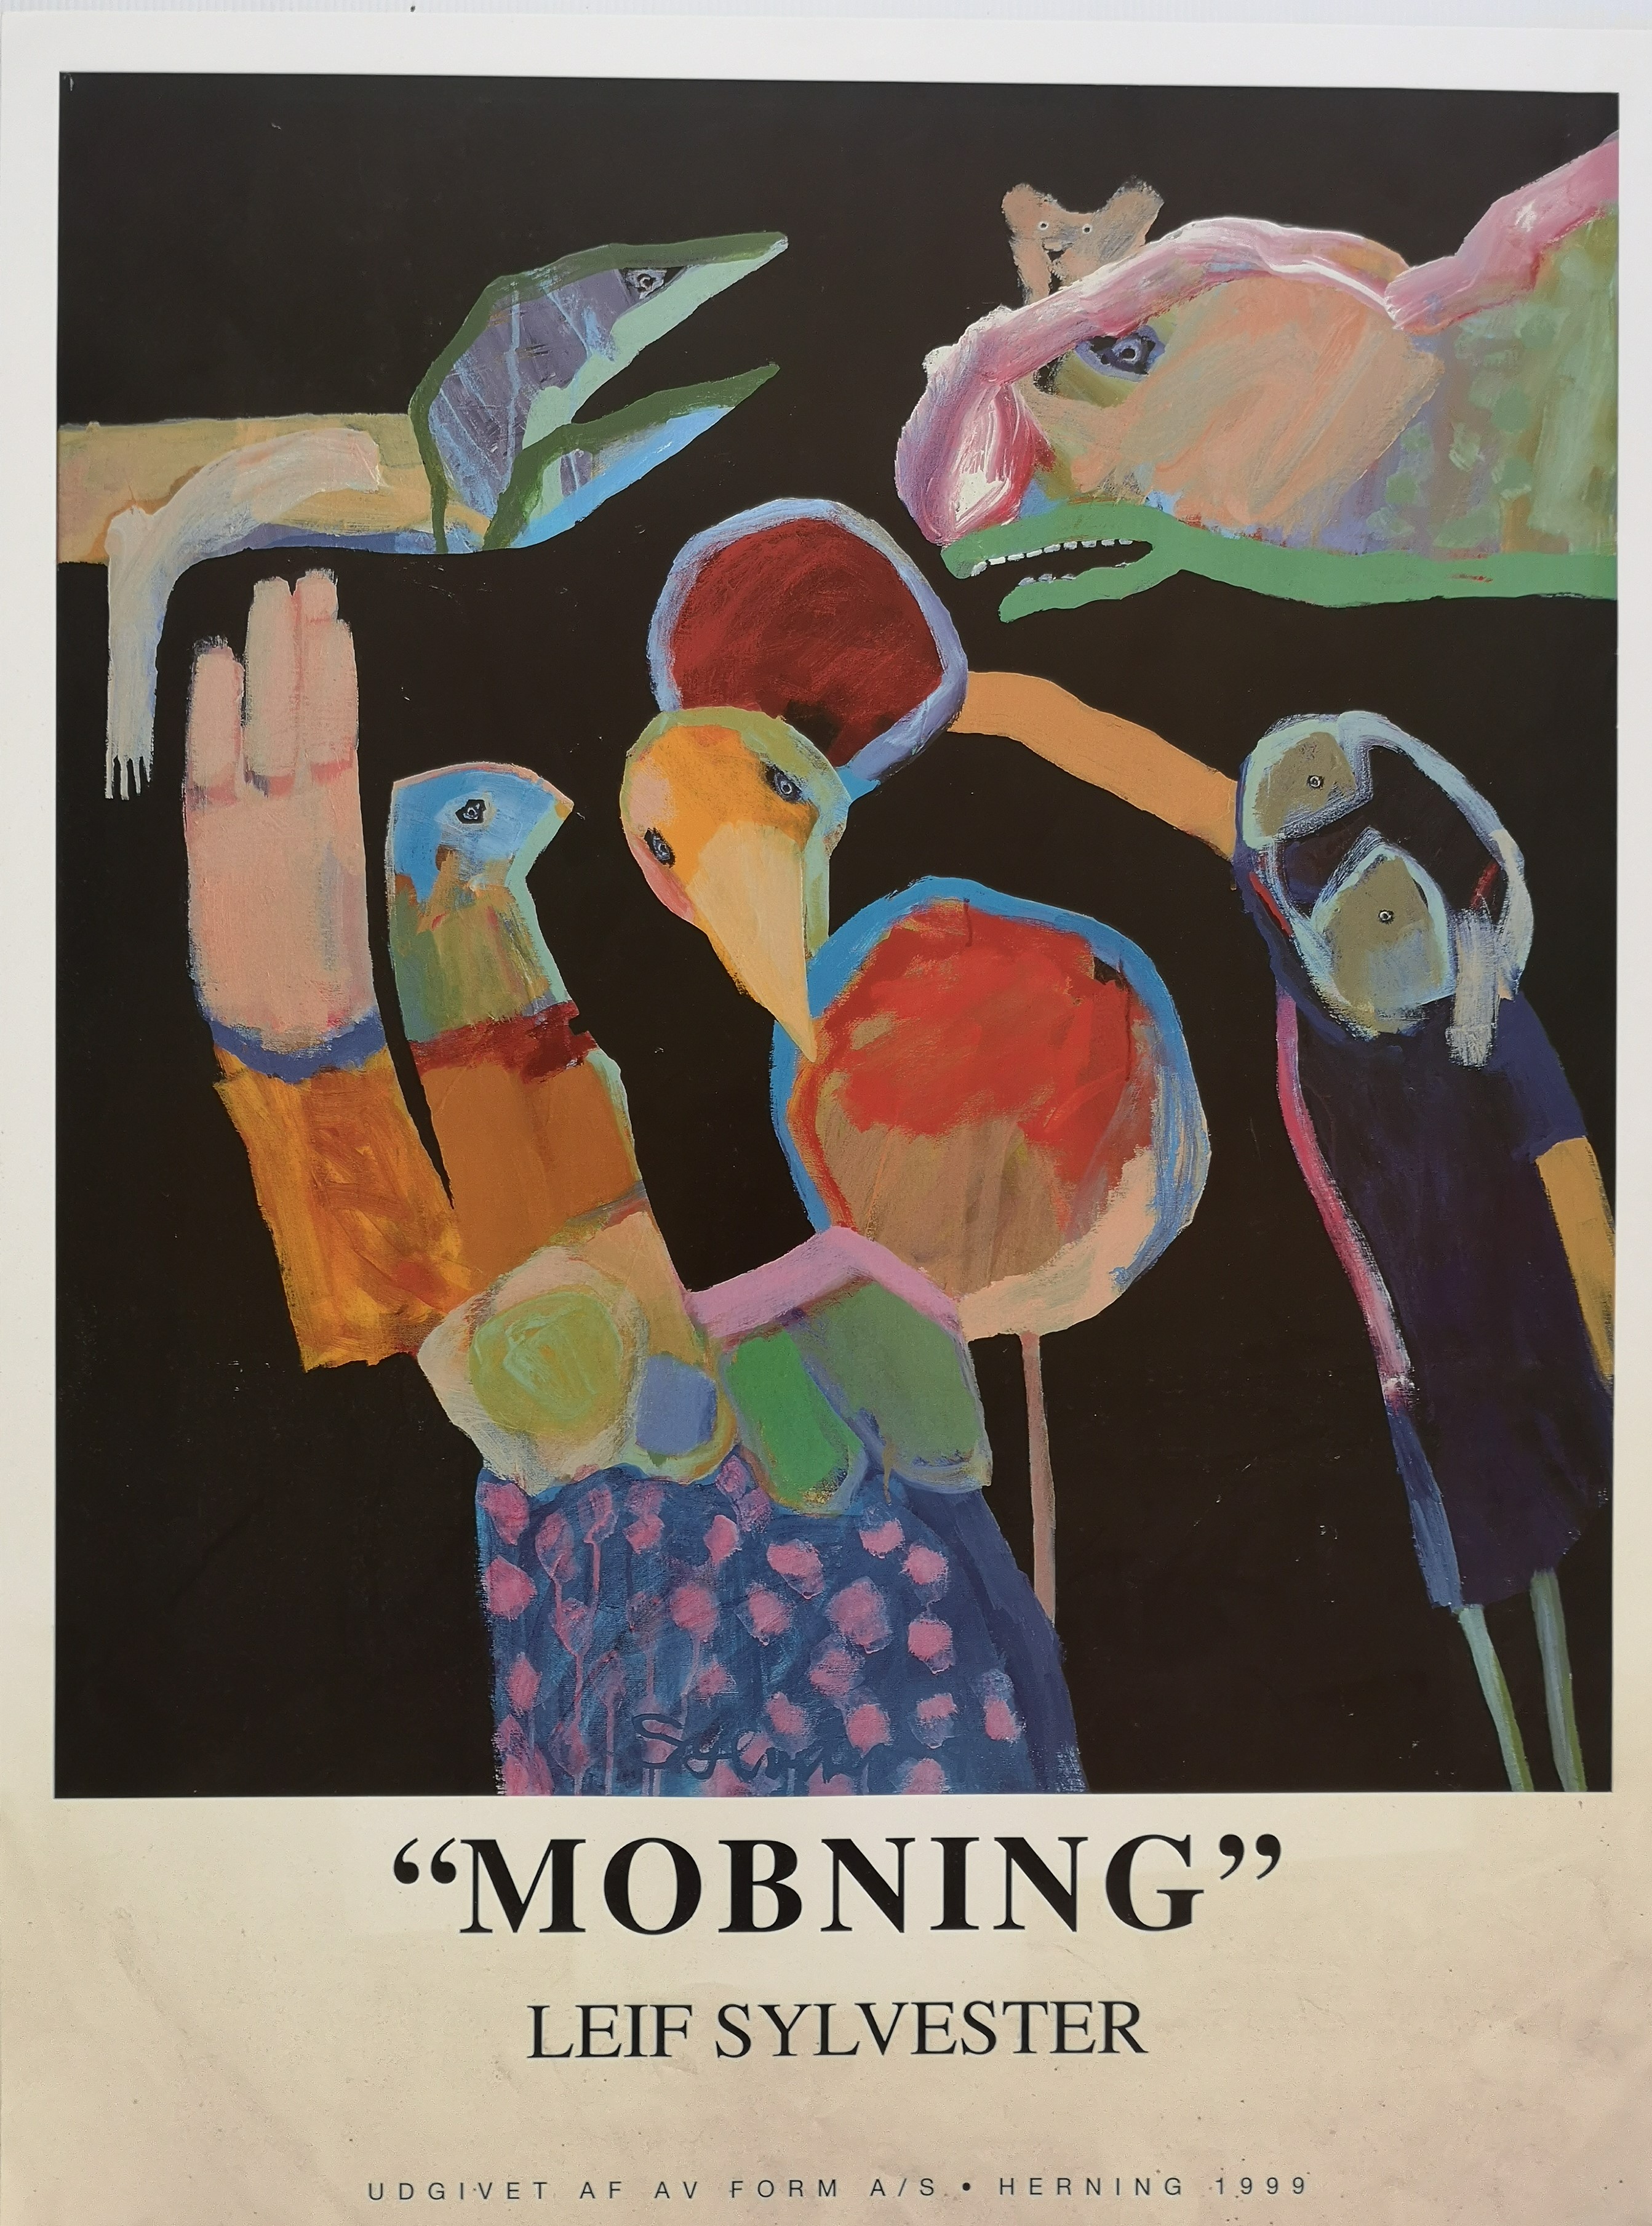 Plakat: "Mobning" Leif Sylvester